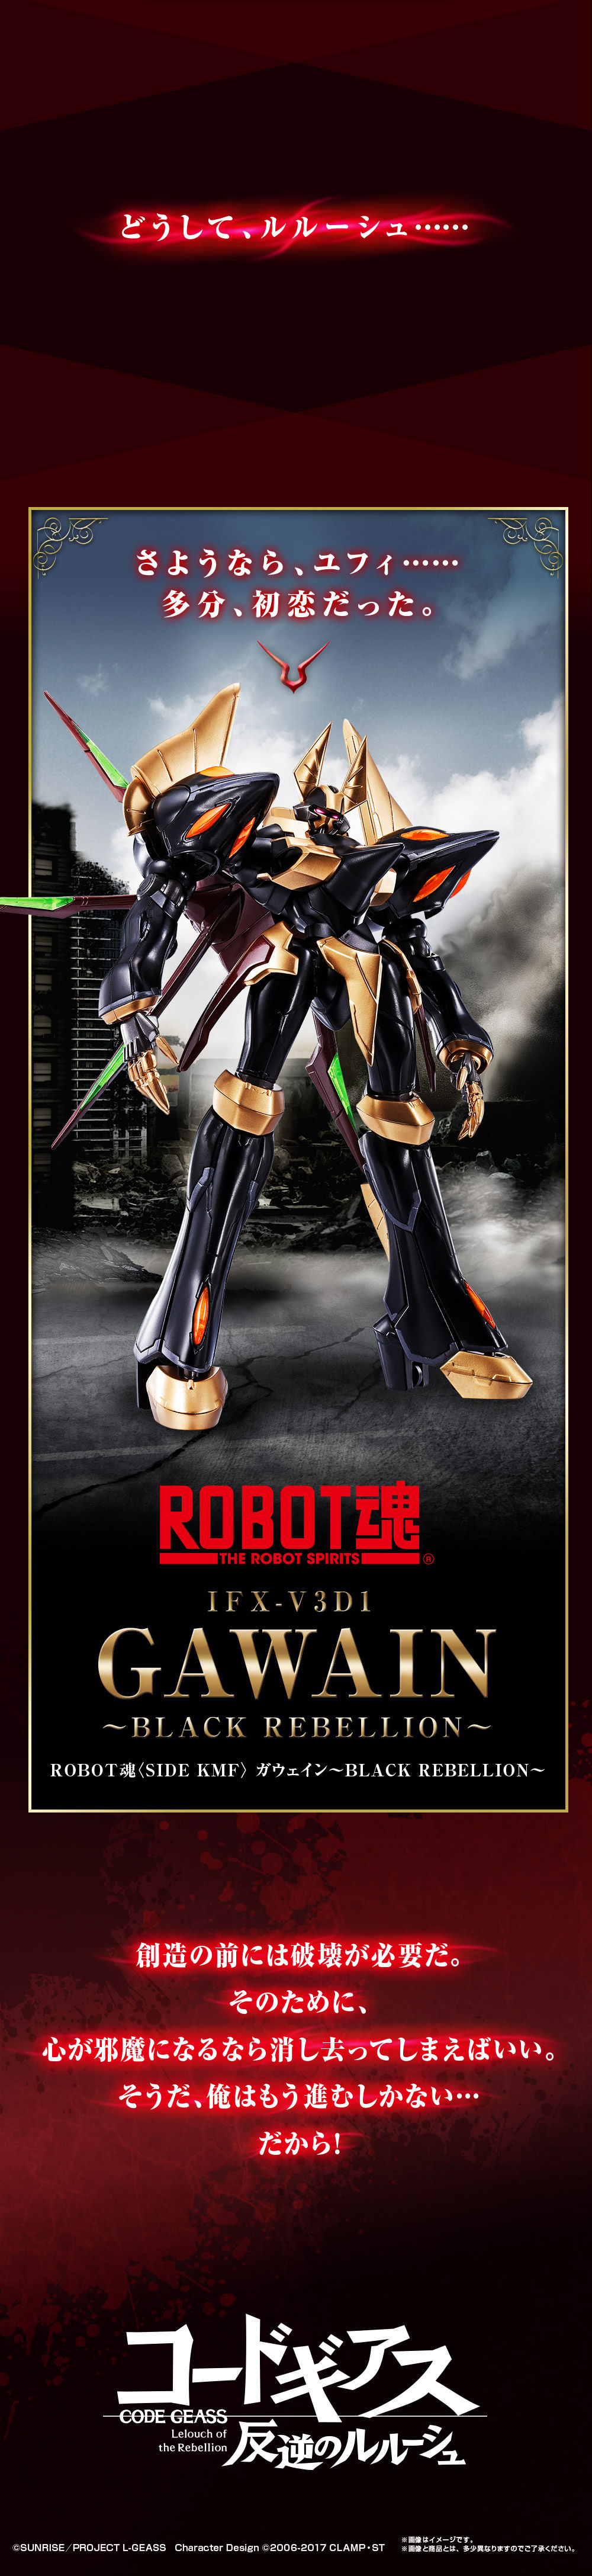 Robot魂 Side Kmf ガウェイン Black Rebellion 趣味 コレクション バンダイナムコグループ公式通販サイト